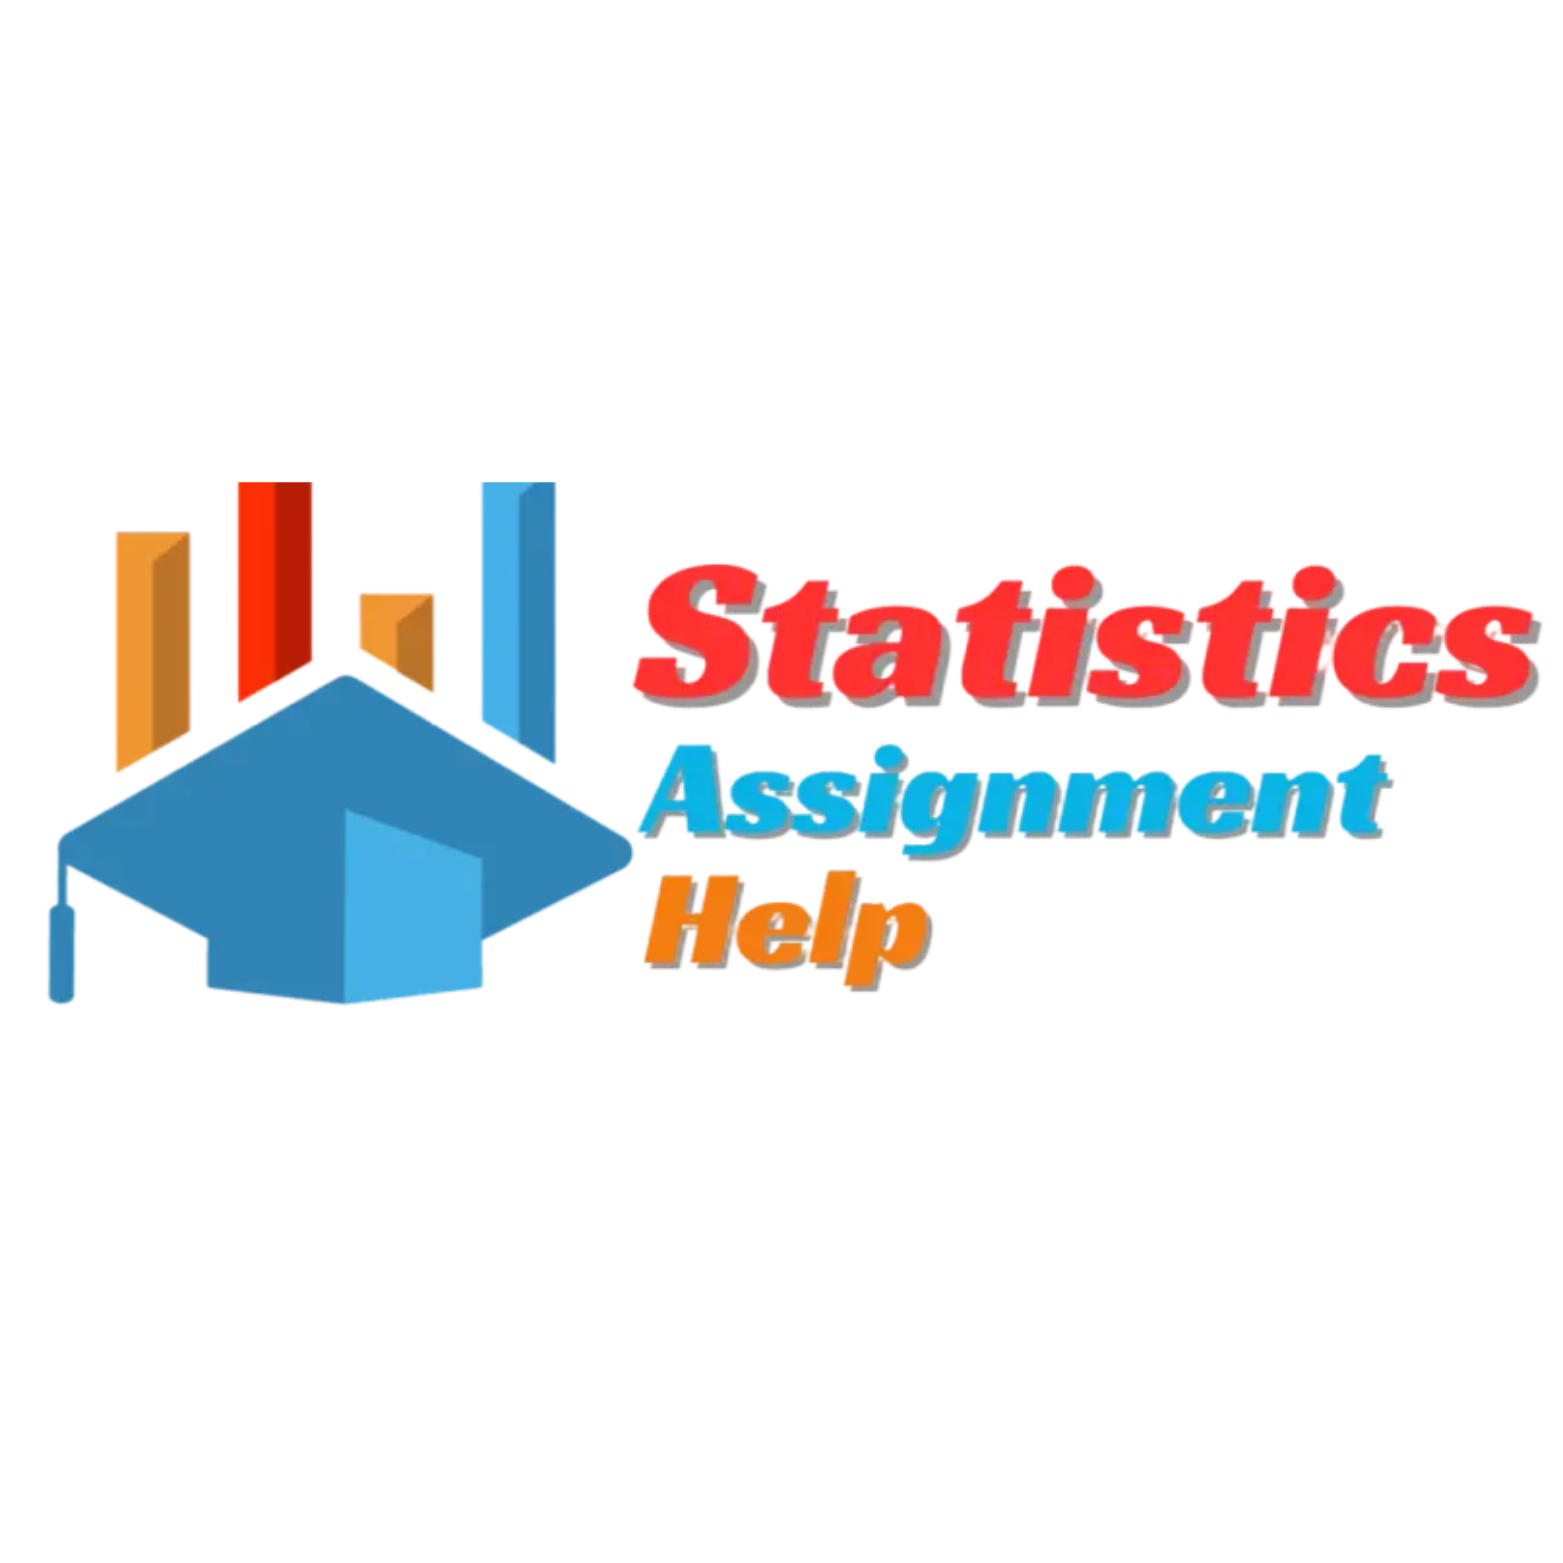 Statistics Homework Help